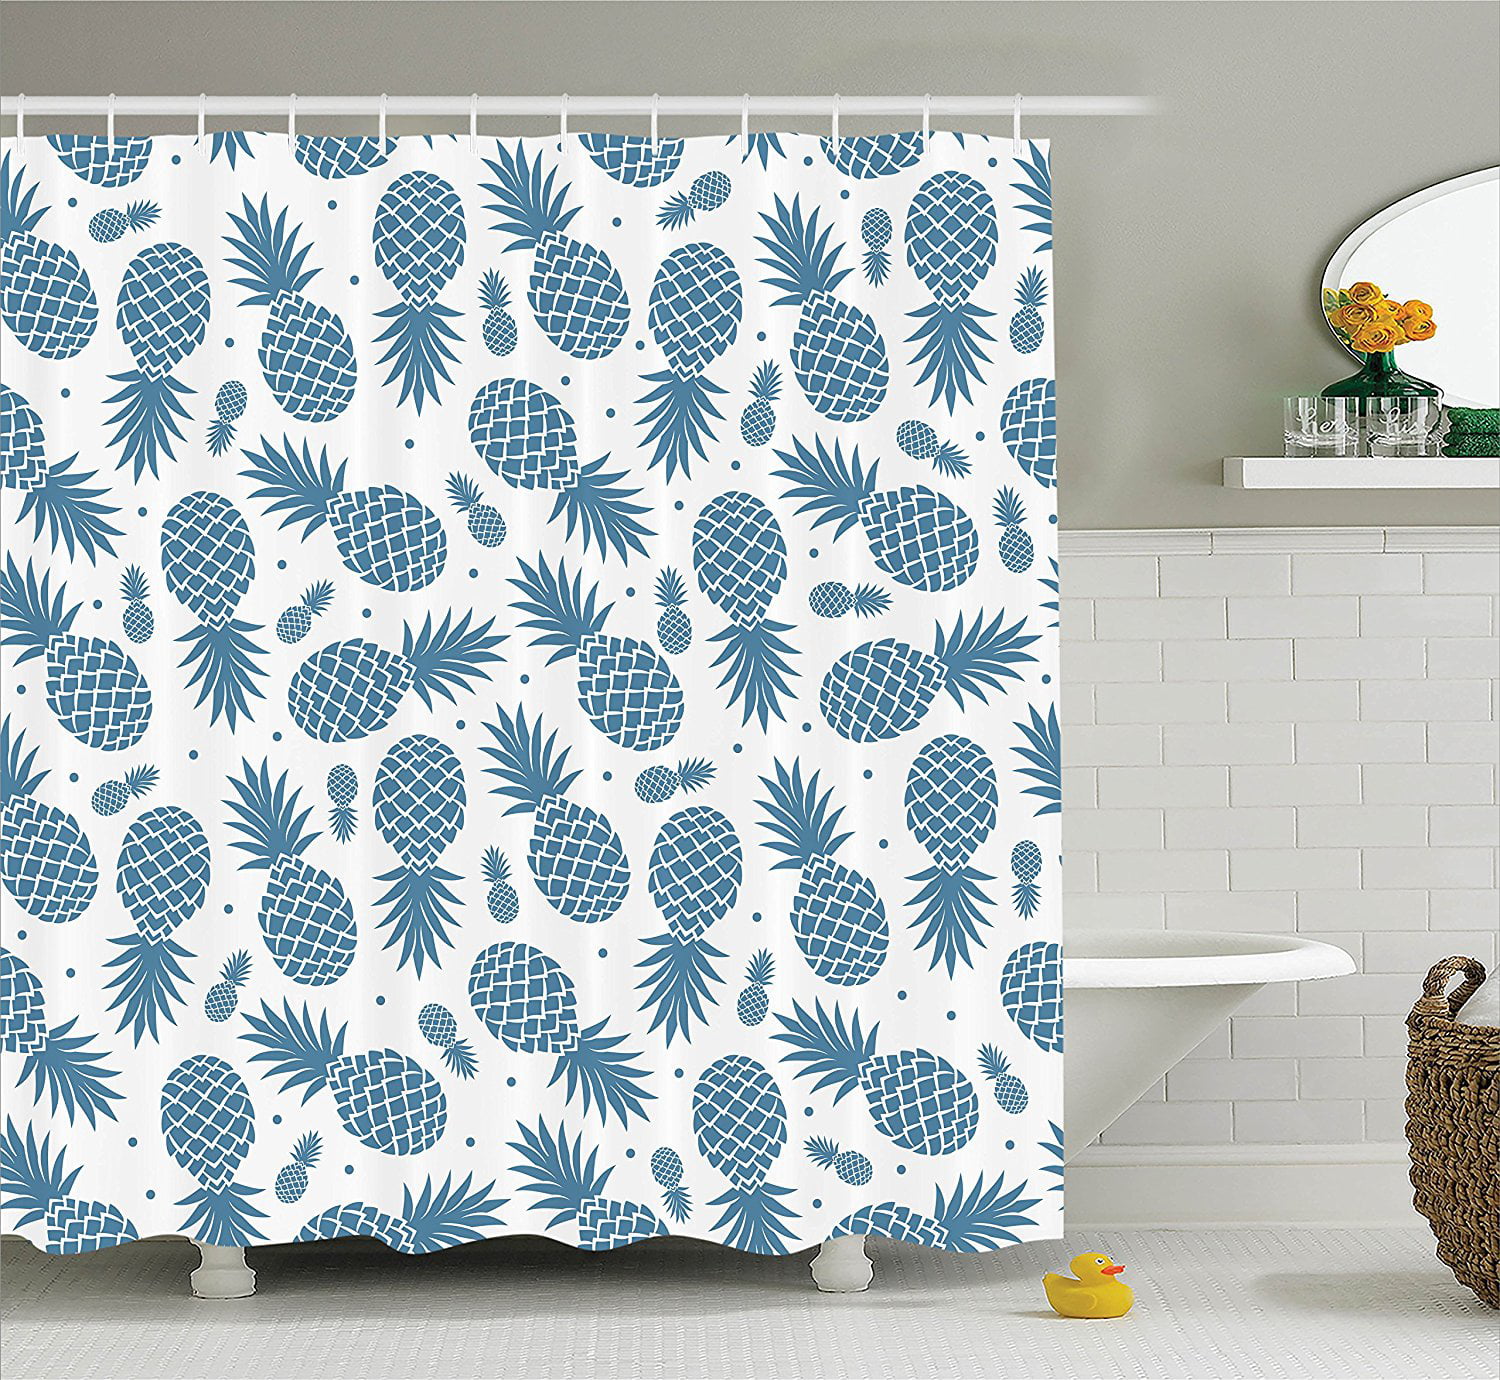 Details about   Pencil Drawing Line Sun Shower Curtain Bathroom Decor Fabric & 12hooks 71" 